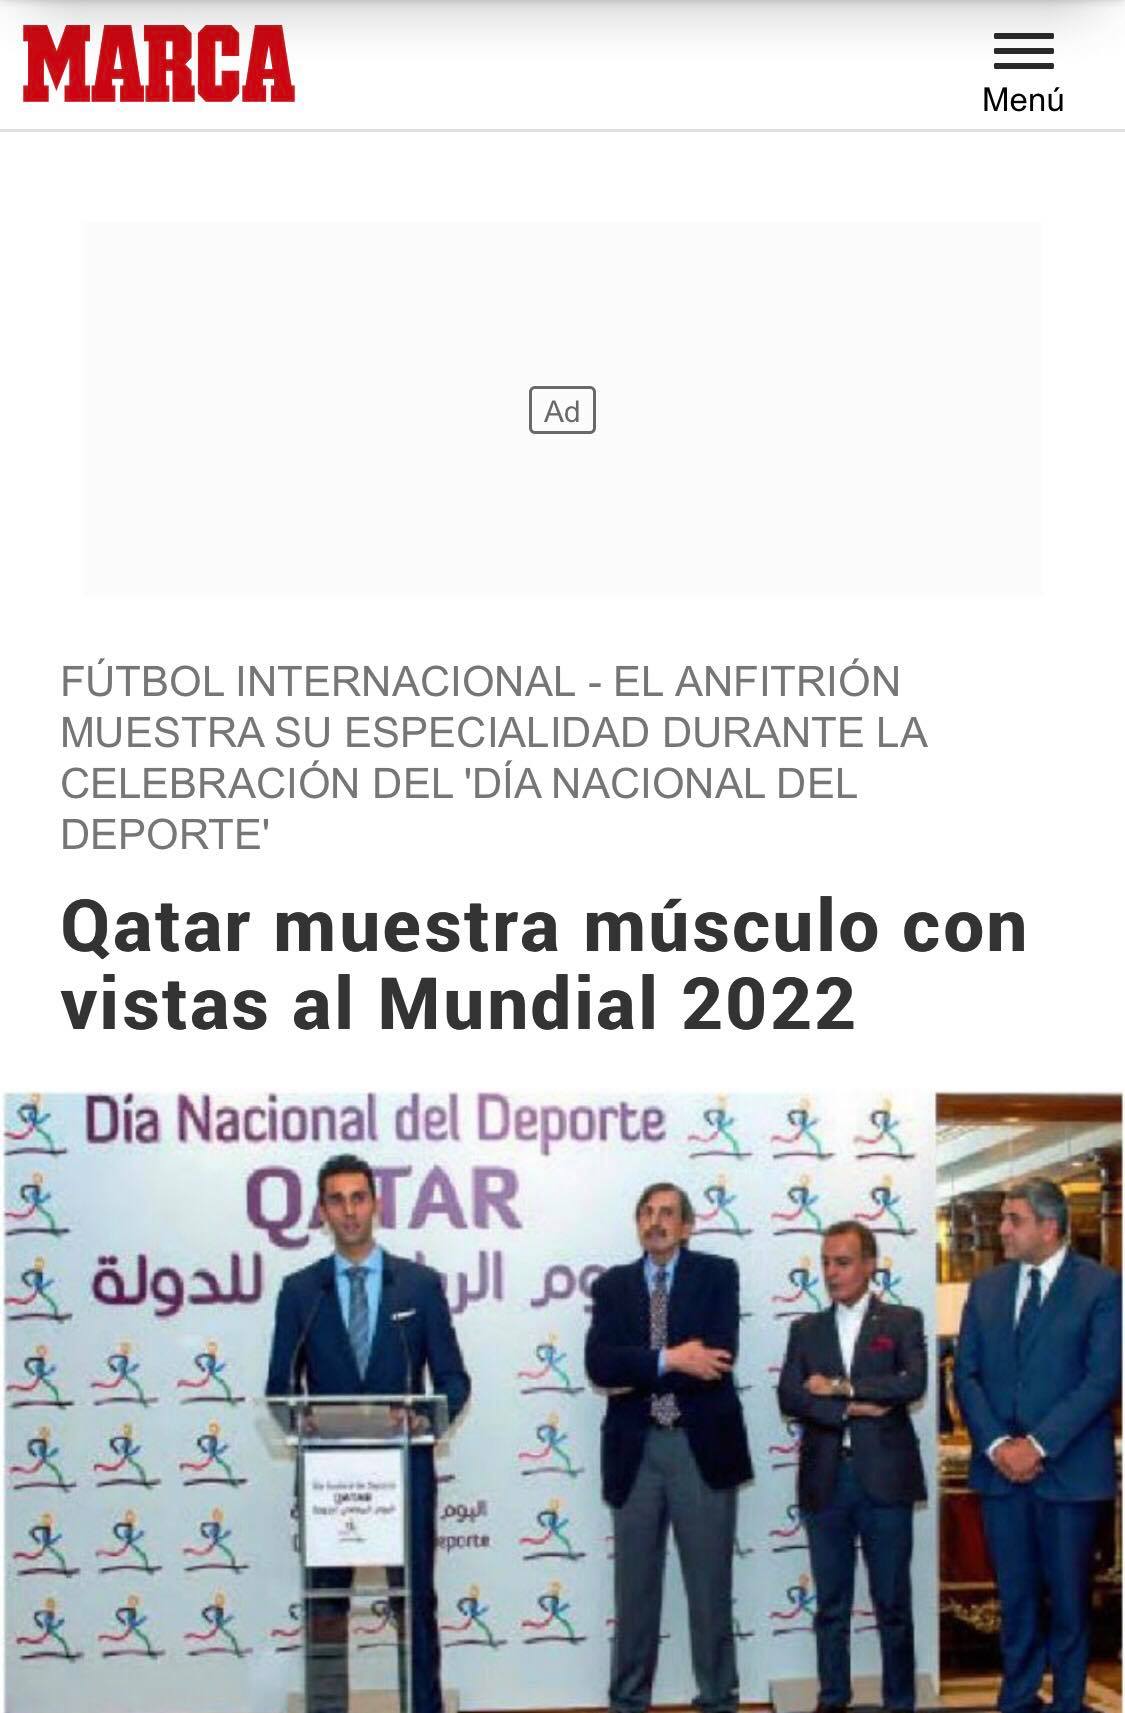 قطر تؤكد قوتها لتنظيم مونديال 2022